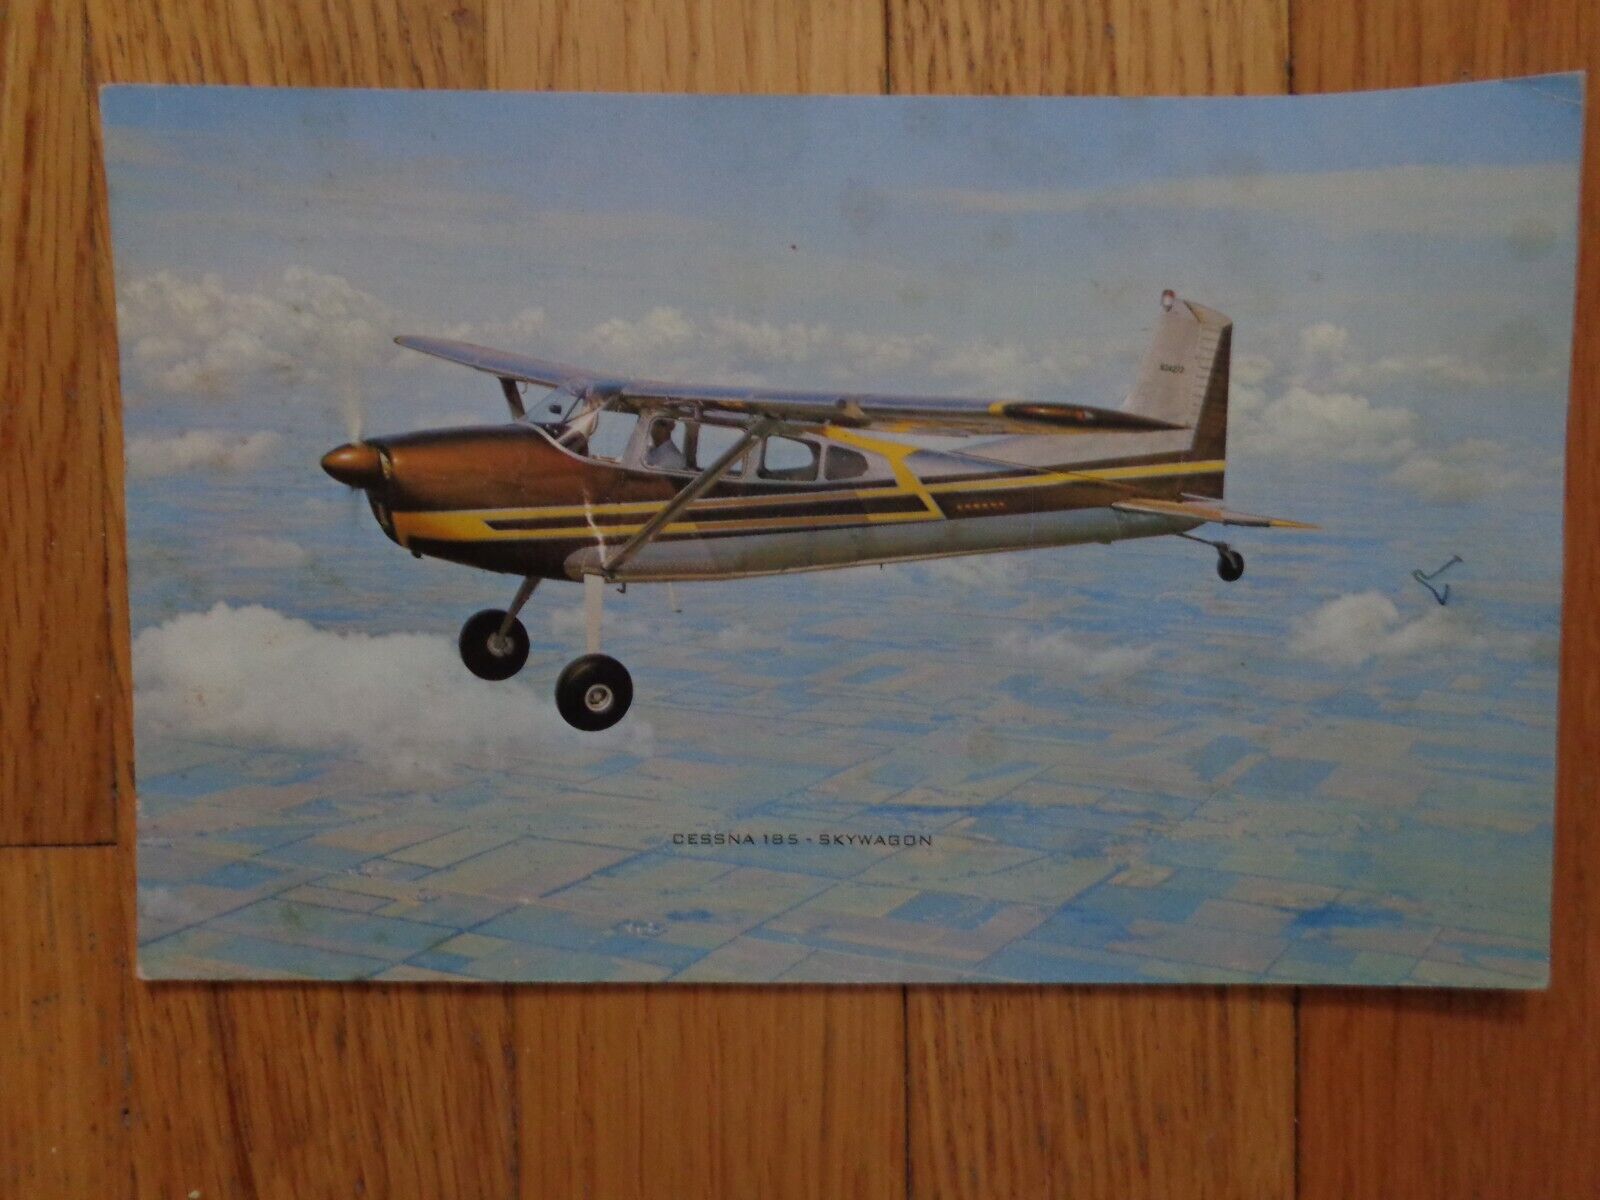 Vintage 1960's Cessna Skywagon 185 Unused Dealer's Promotional Postcard